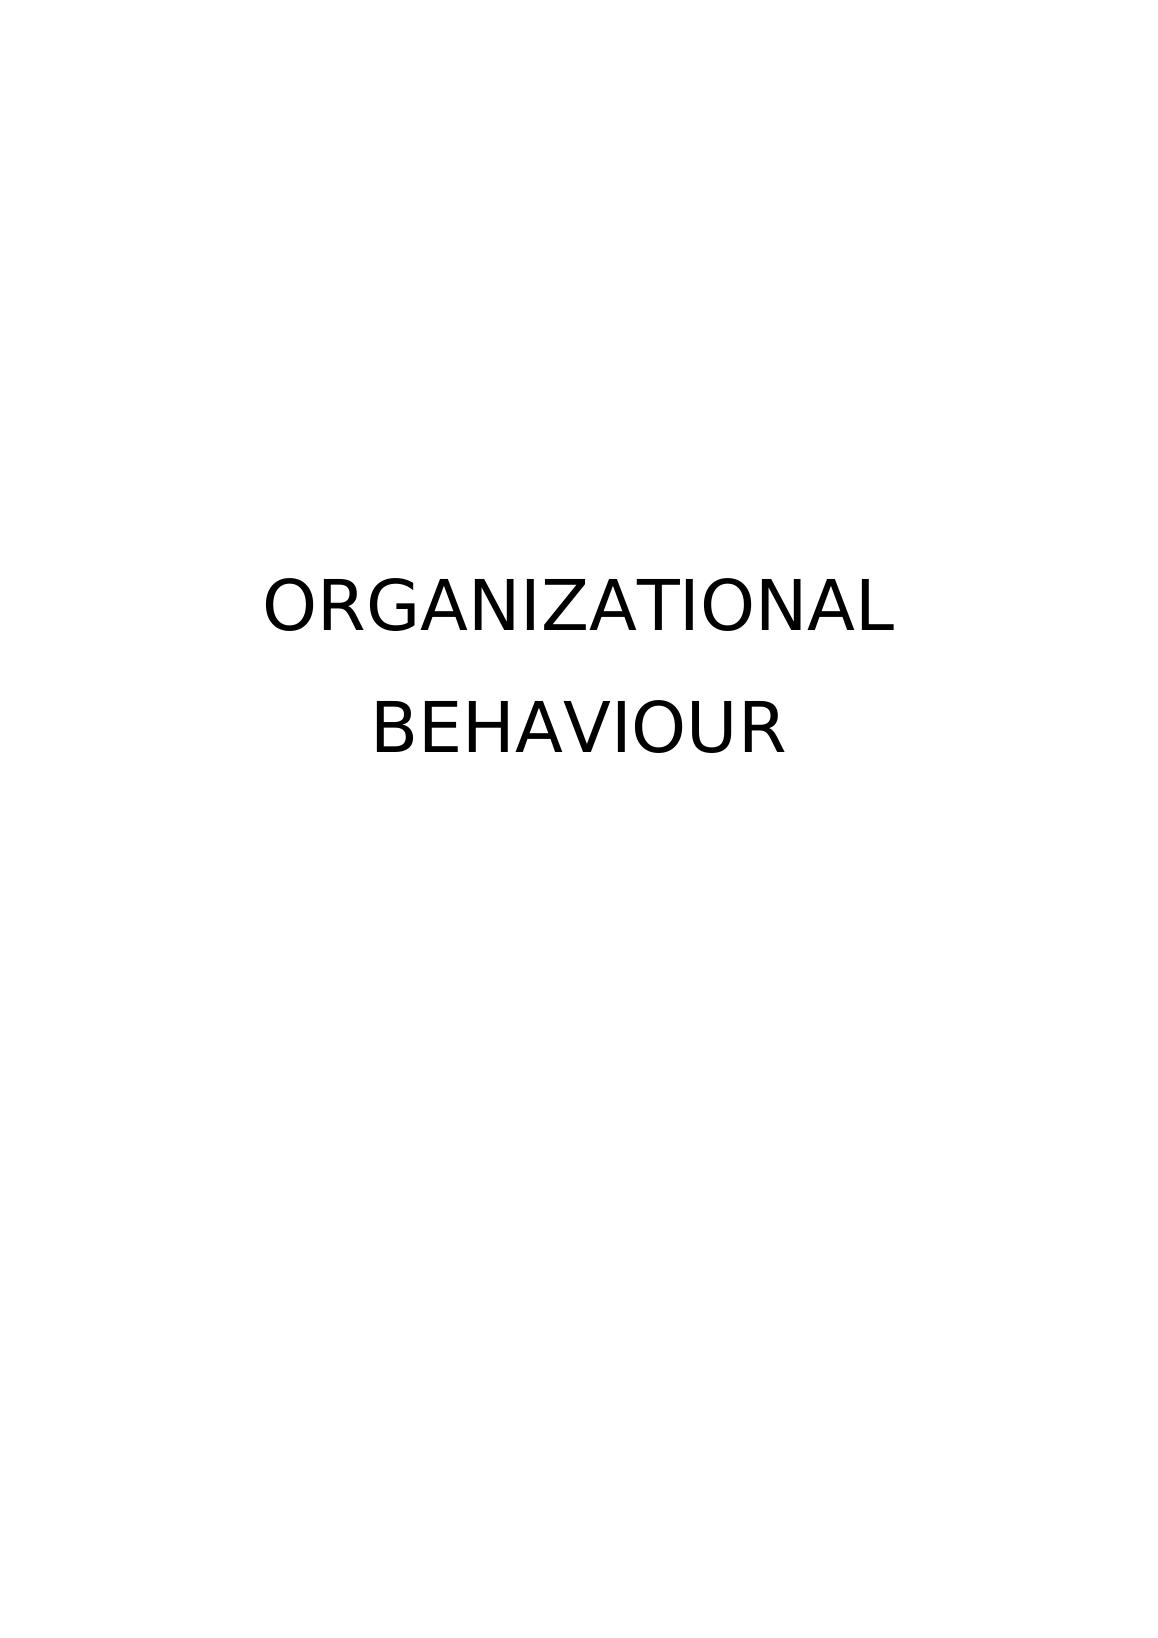 Report on Organizational Behavior Ryanair Airlines_1